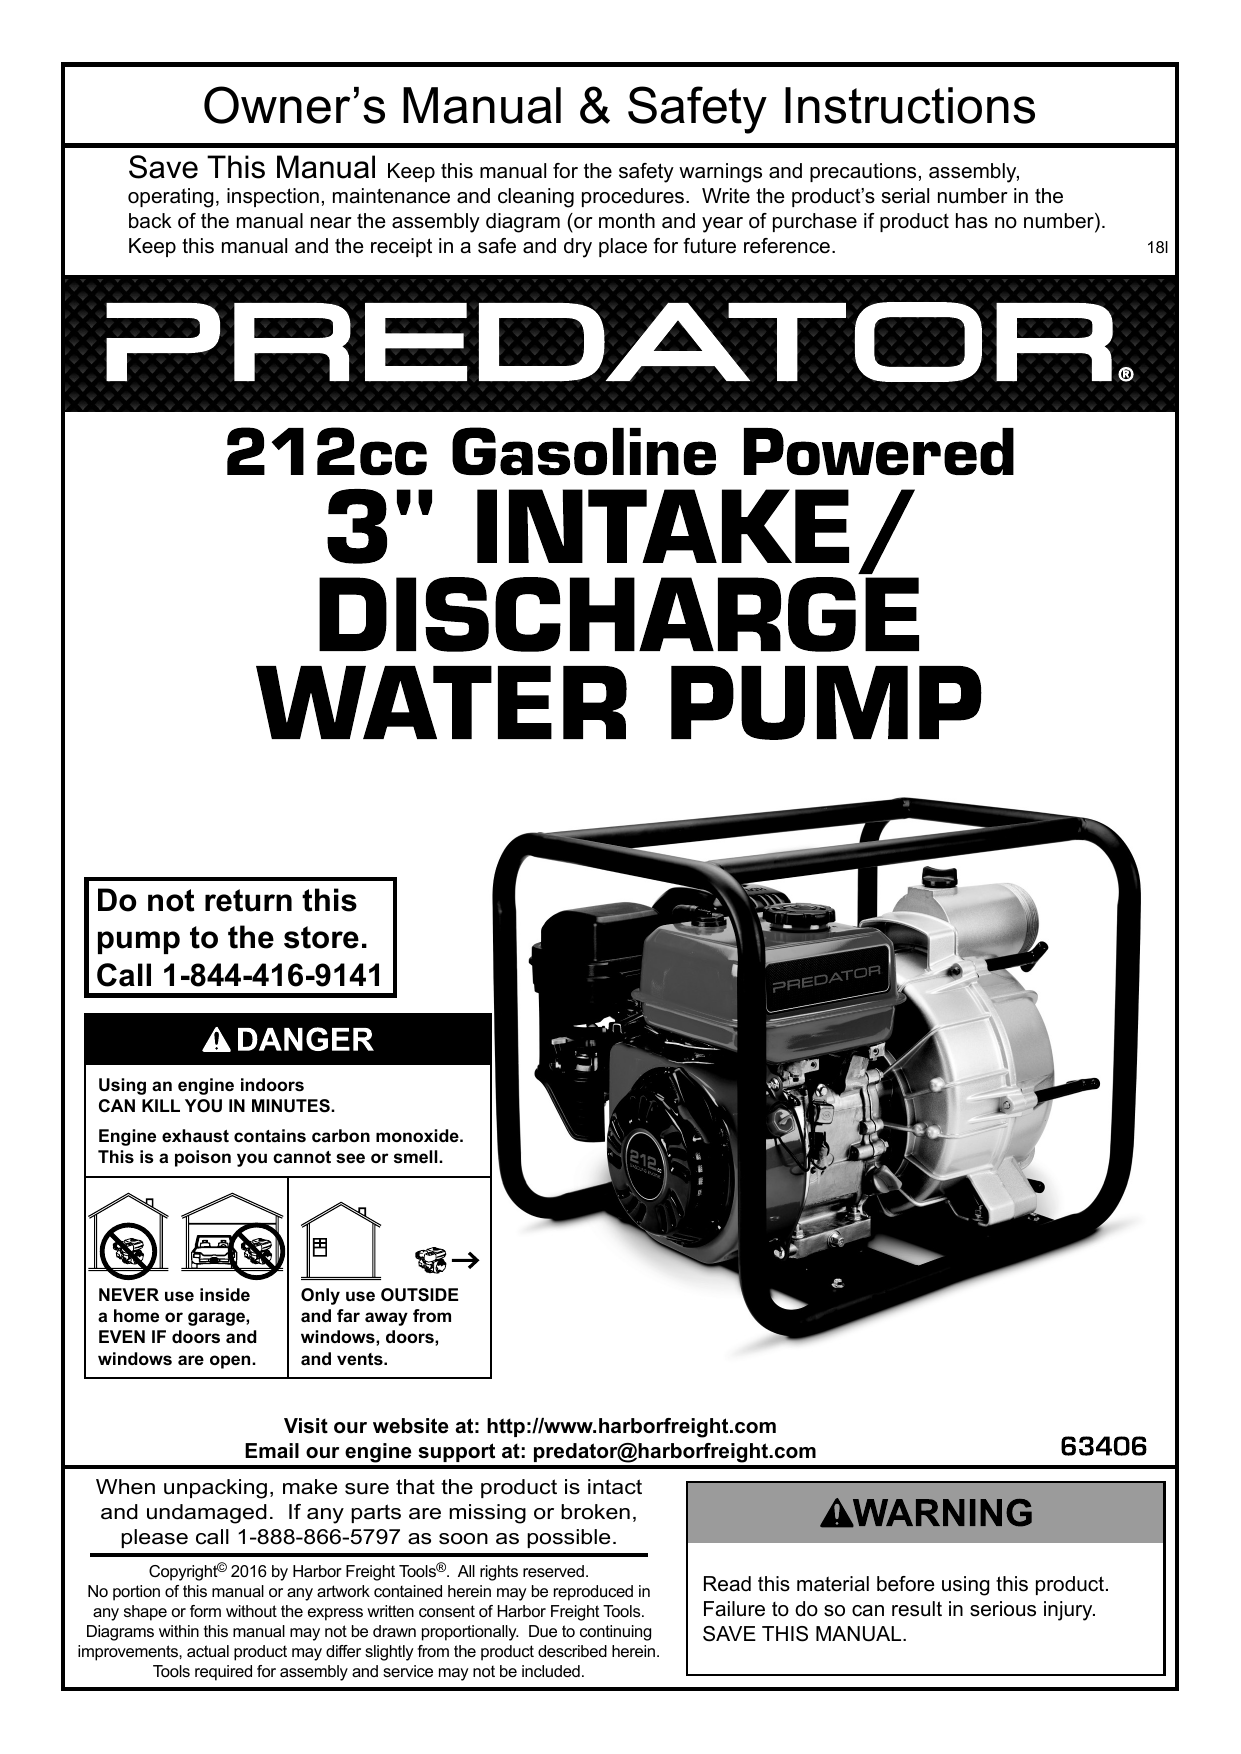 Air Filter for Harbor Freight Predator 63405 63406 212cc 2" 3" Water Pump 